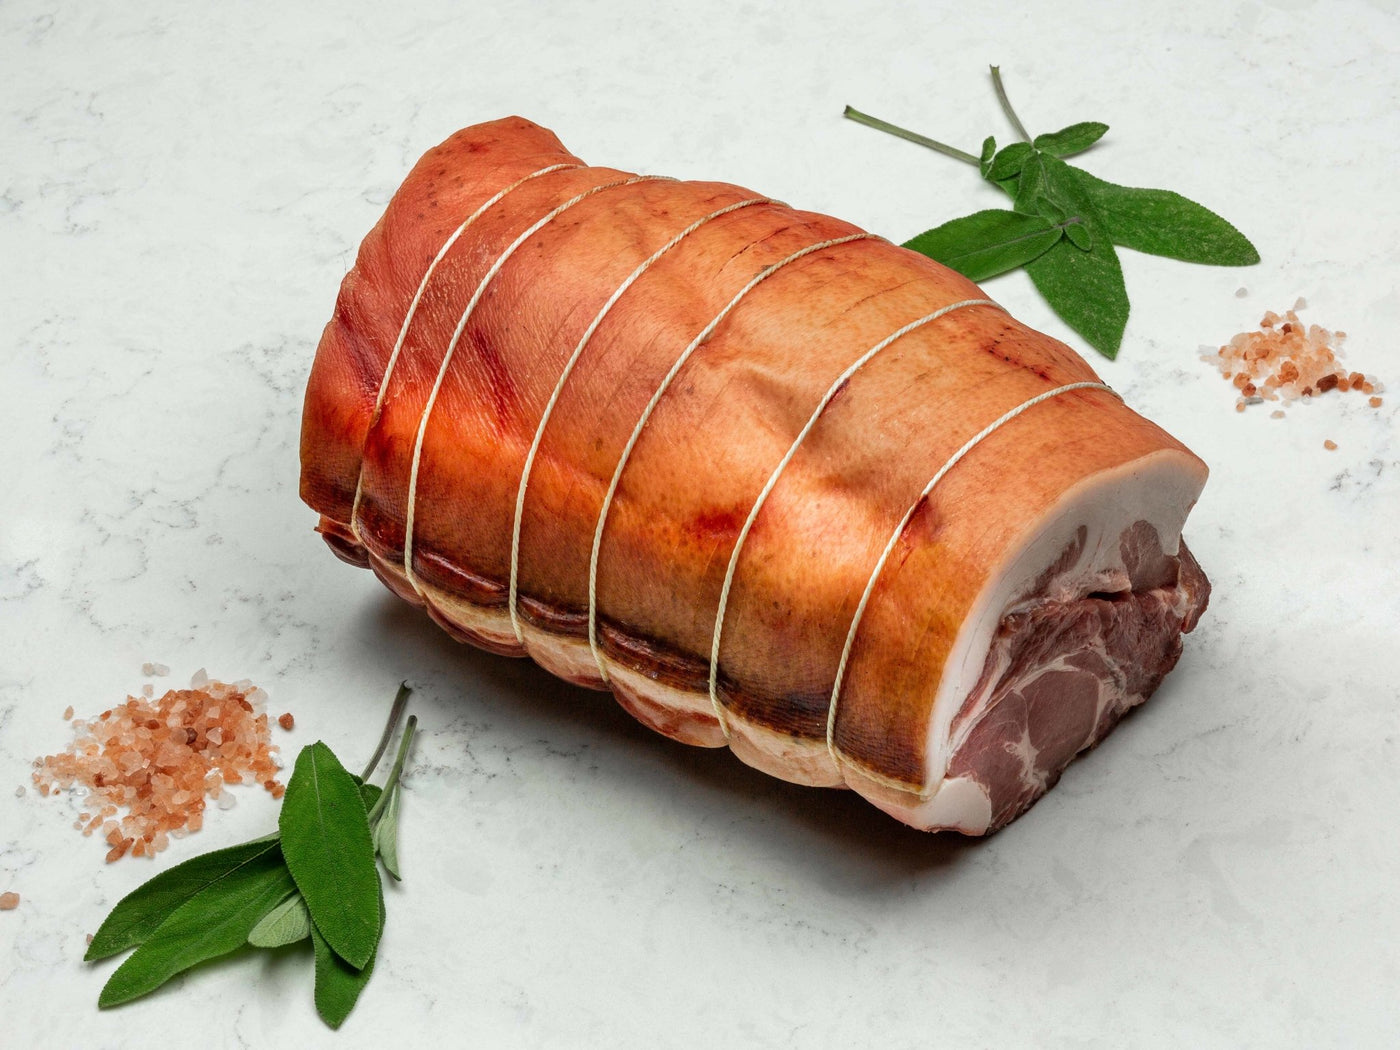 7 Day Dry-Aged, Free Range Pork Shoulder - Pork - Thomas Joseph Butchery - Ethical Dry-Aged Meat The Best Steak UK Thomas Joseph Butchery